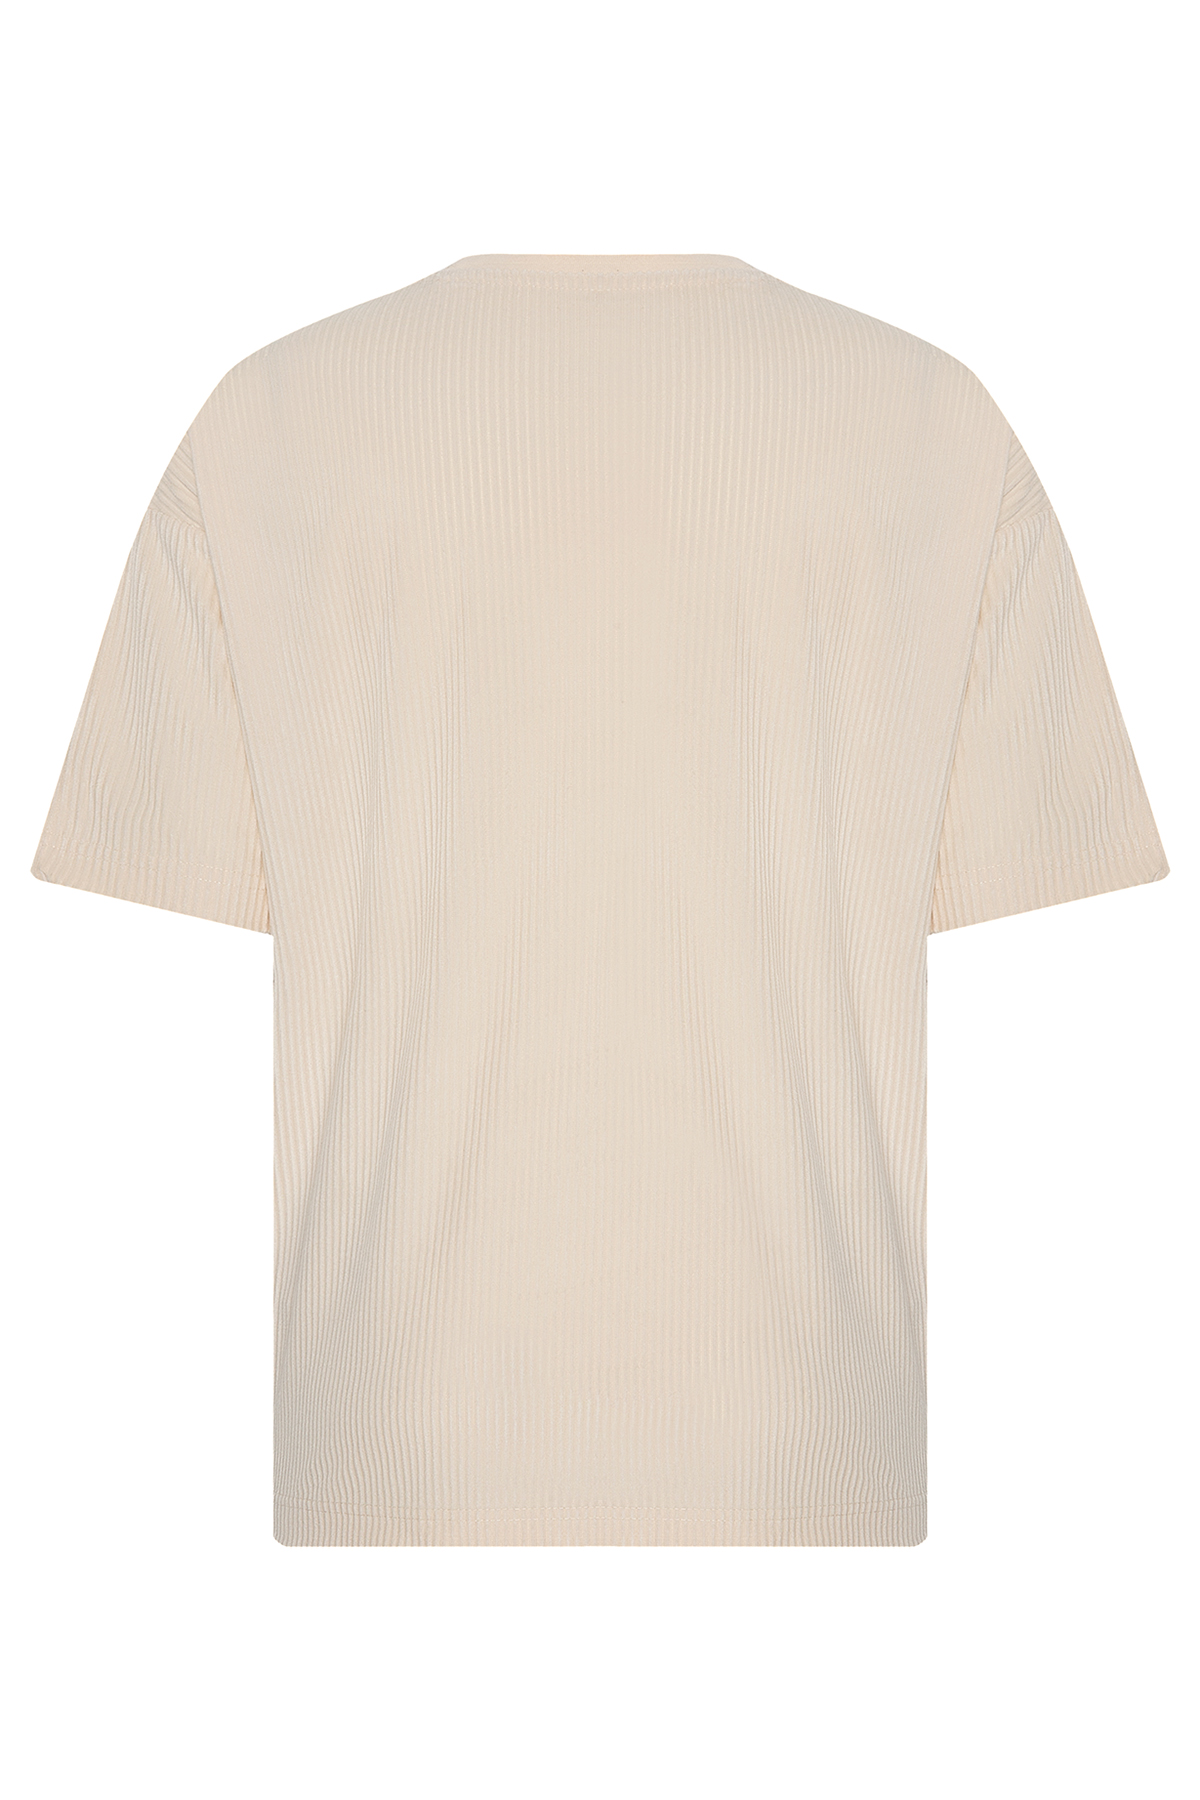 Bej Freedom Nakışlı Fitilli Oversize T-Shirt 2YXE2-45986-25